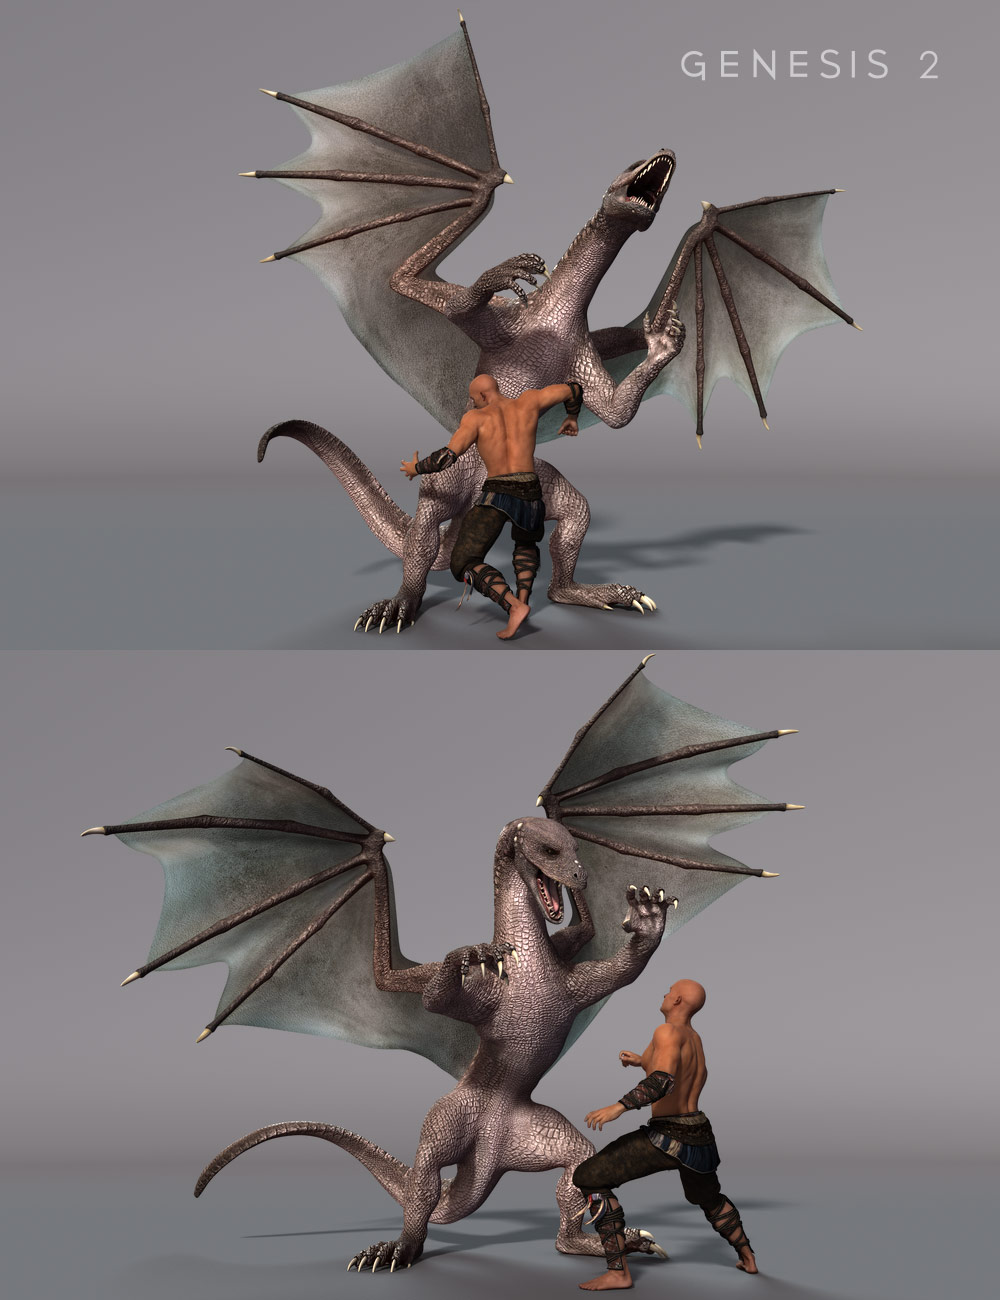 DAZ Dragon 3 Fantasy Poses by: Muscleman, 3D Models by Daz 3D